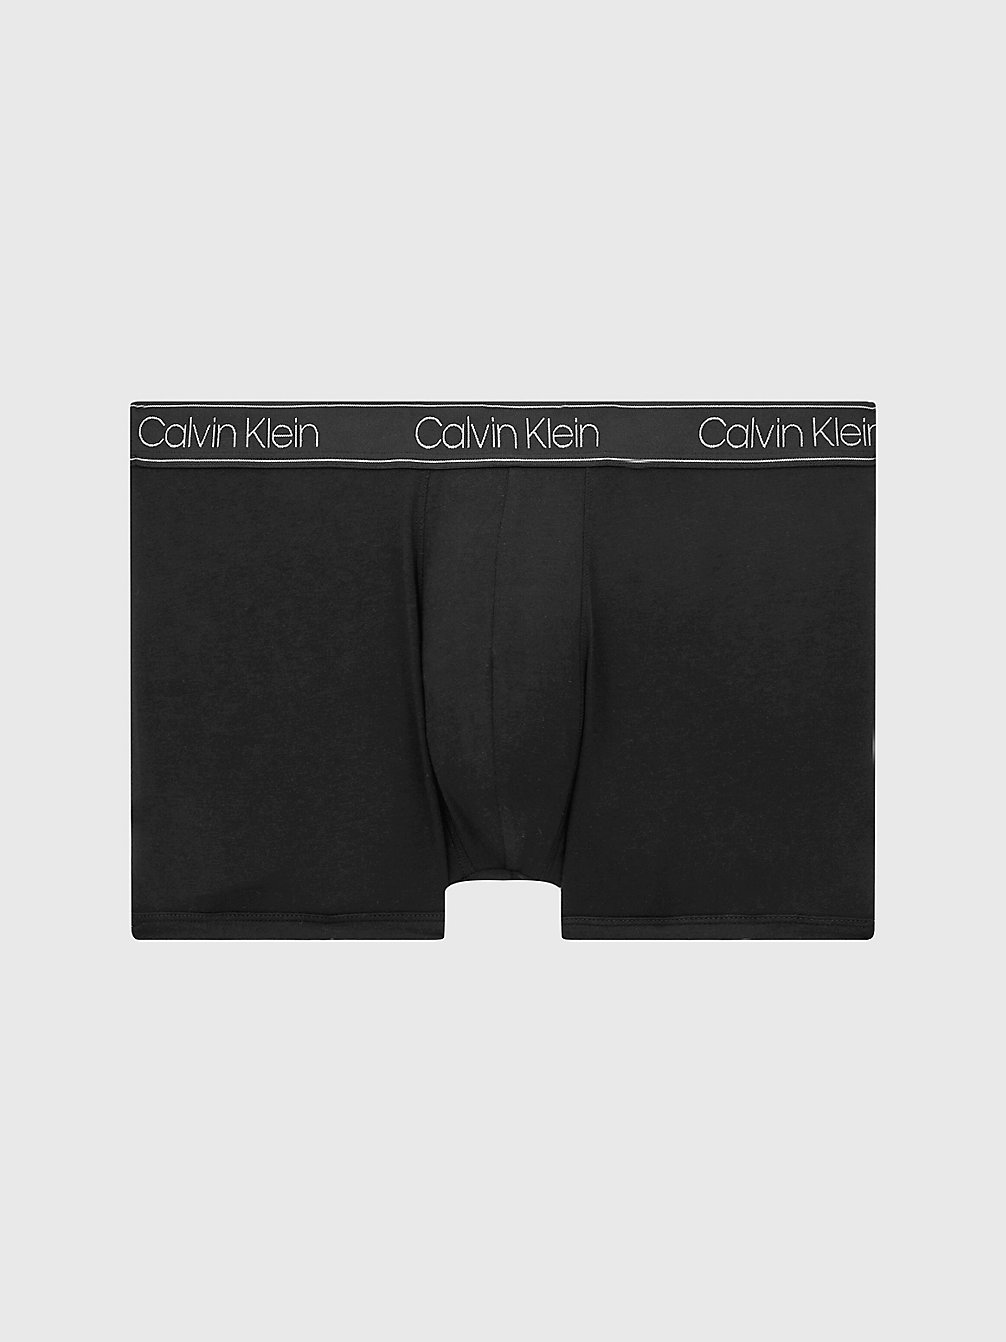 Bóxer - Essential Calvin > BLACK > undefined hombre > Calvin Klein